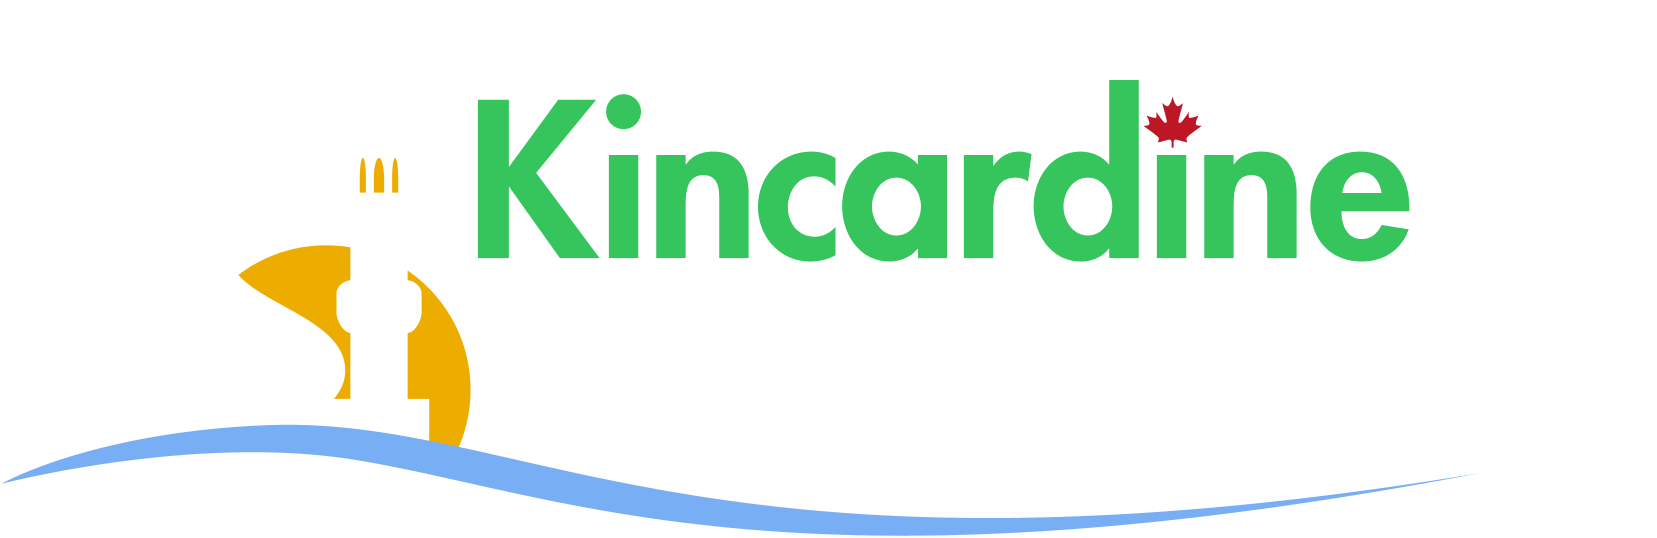 Kincardine islamic centre logo